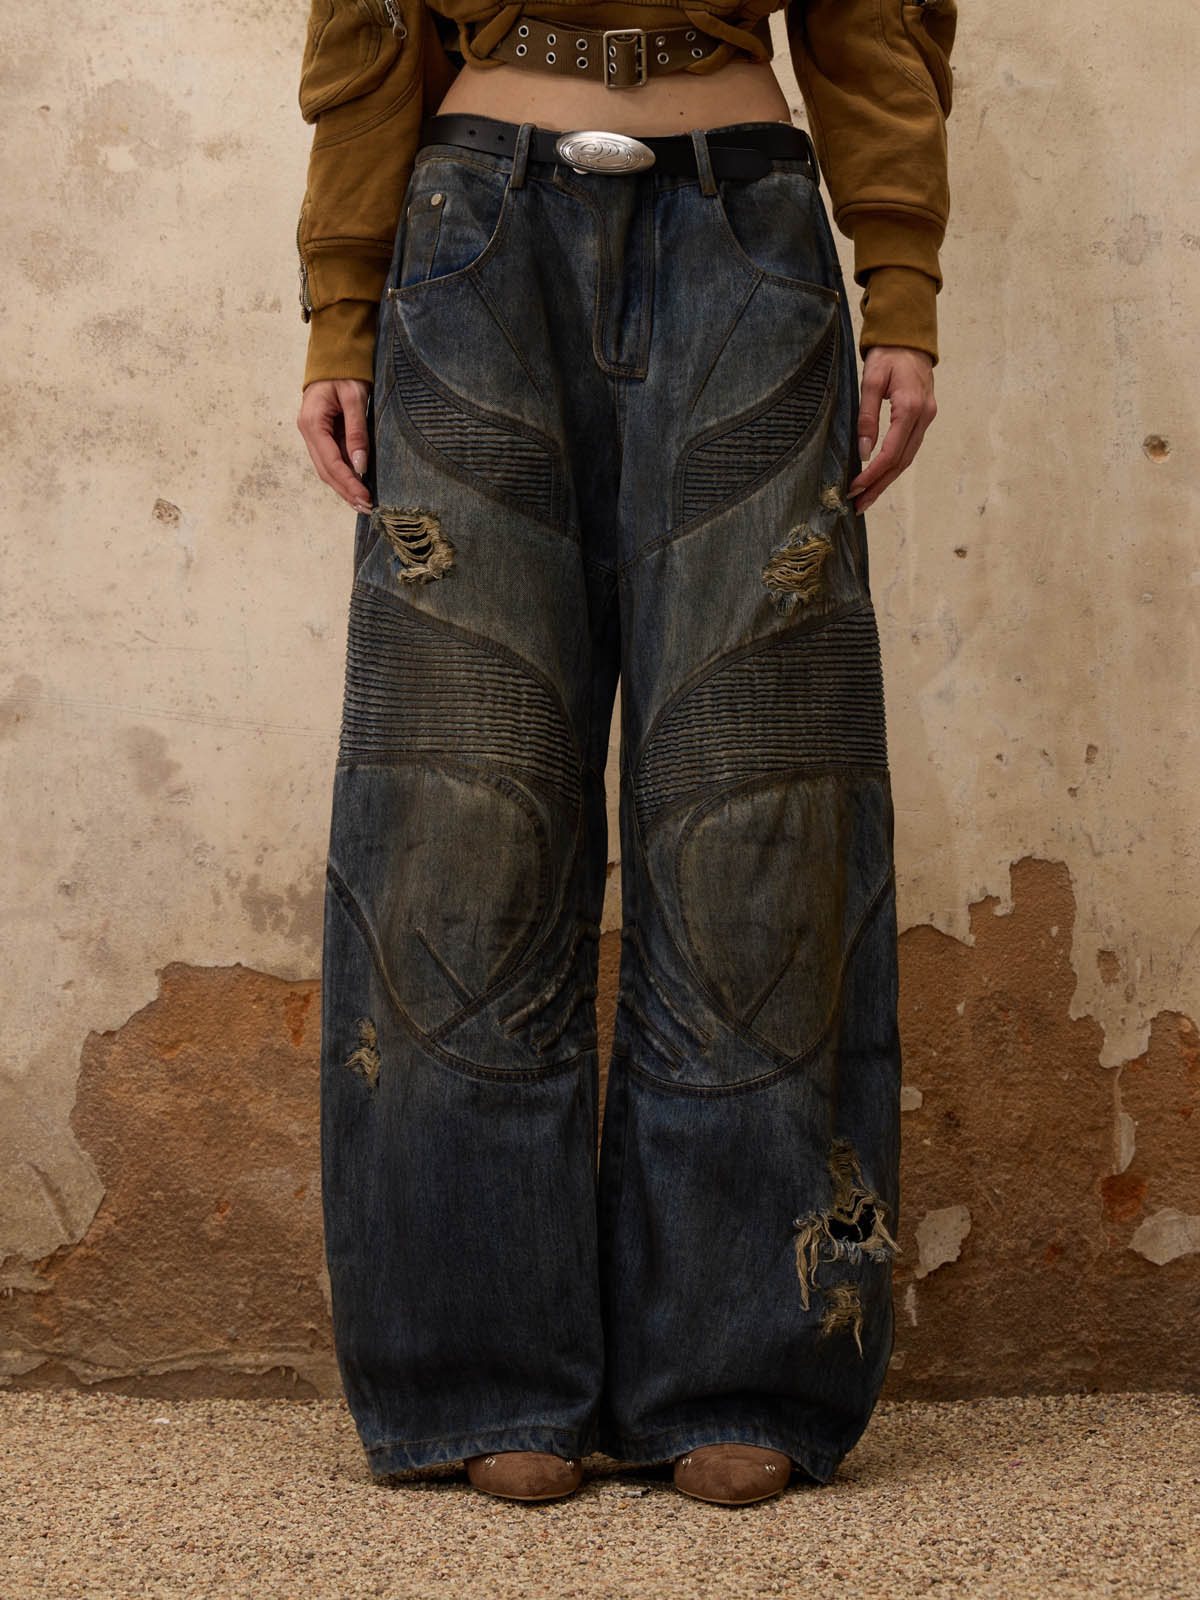 Personsoul Mud Dirty Denim Jeans